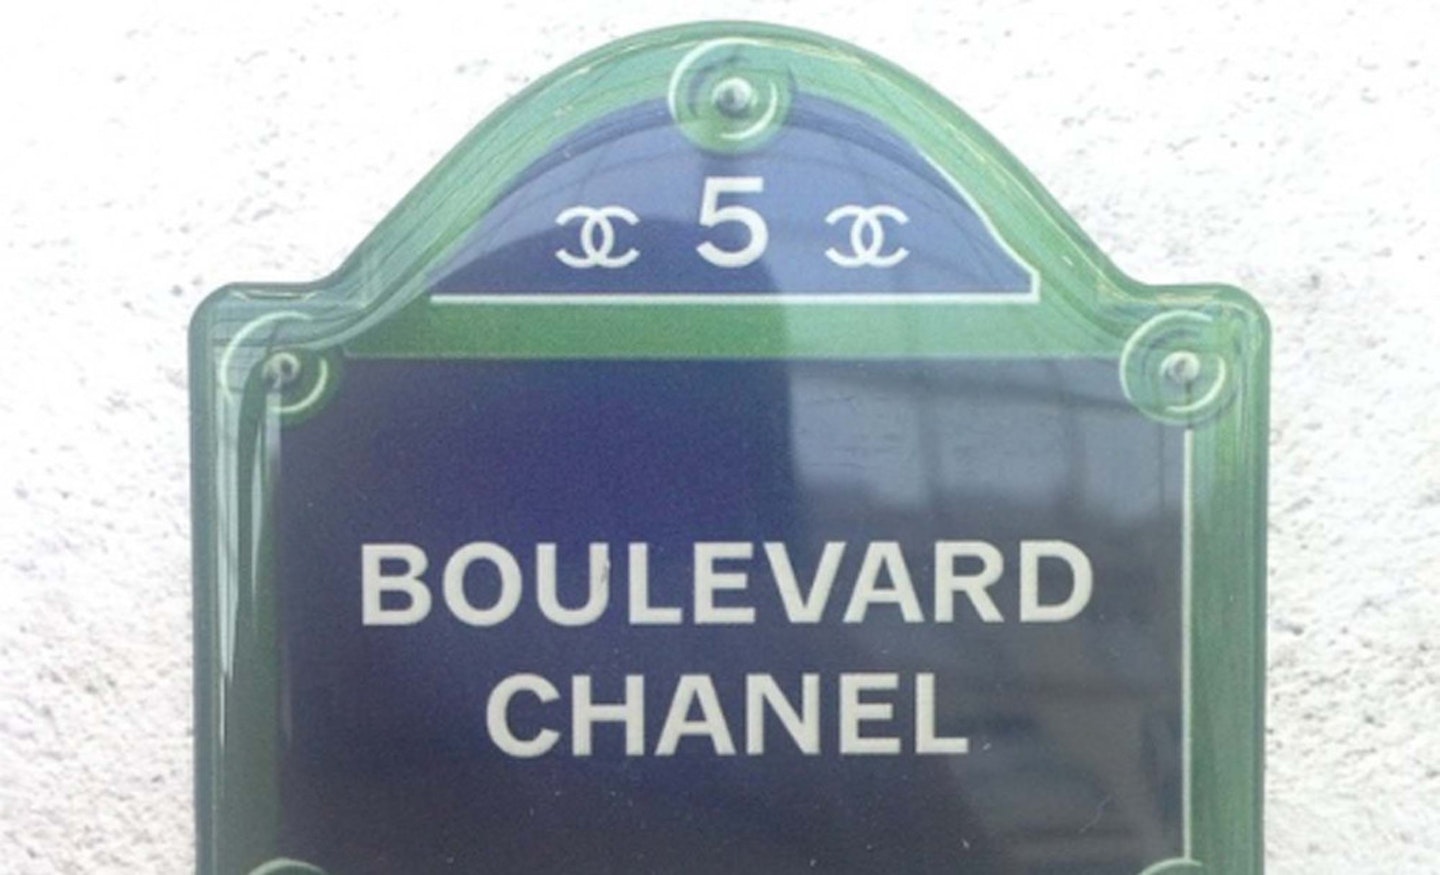 @Grazia_Live: Number 5 Boulevard Chanel